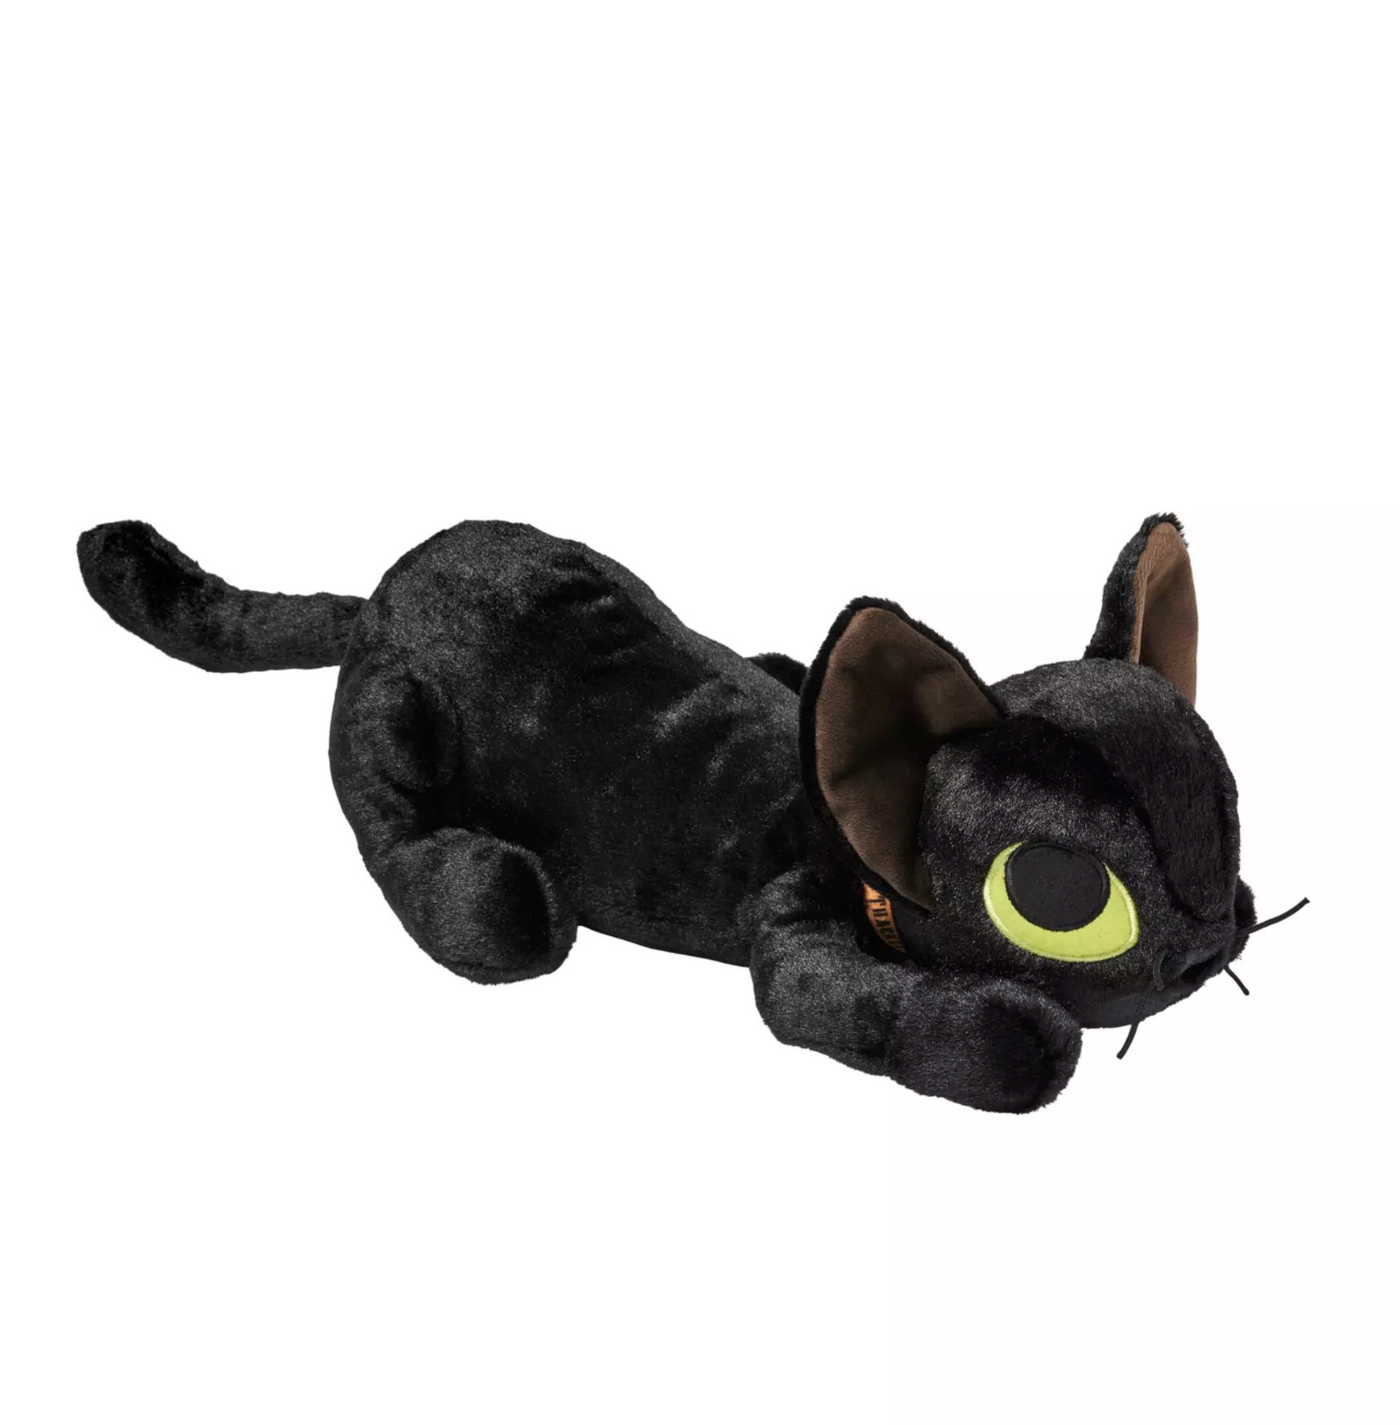 Disney Parks Halloween Hocus Pocus Thackery Binx Black Cat Plush New with Tag